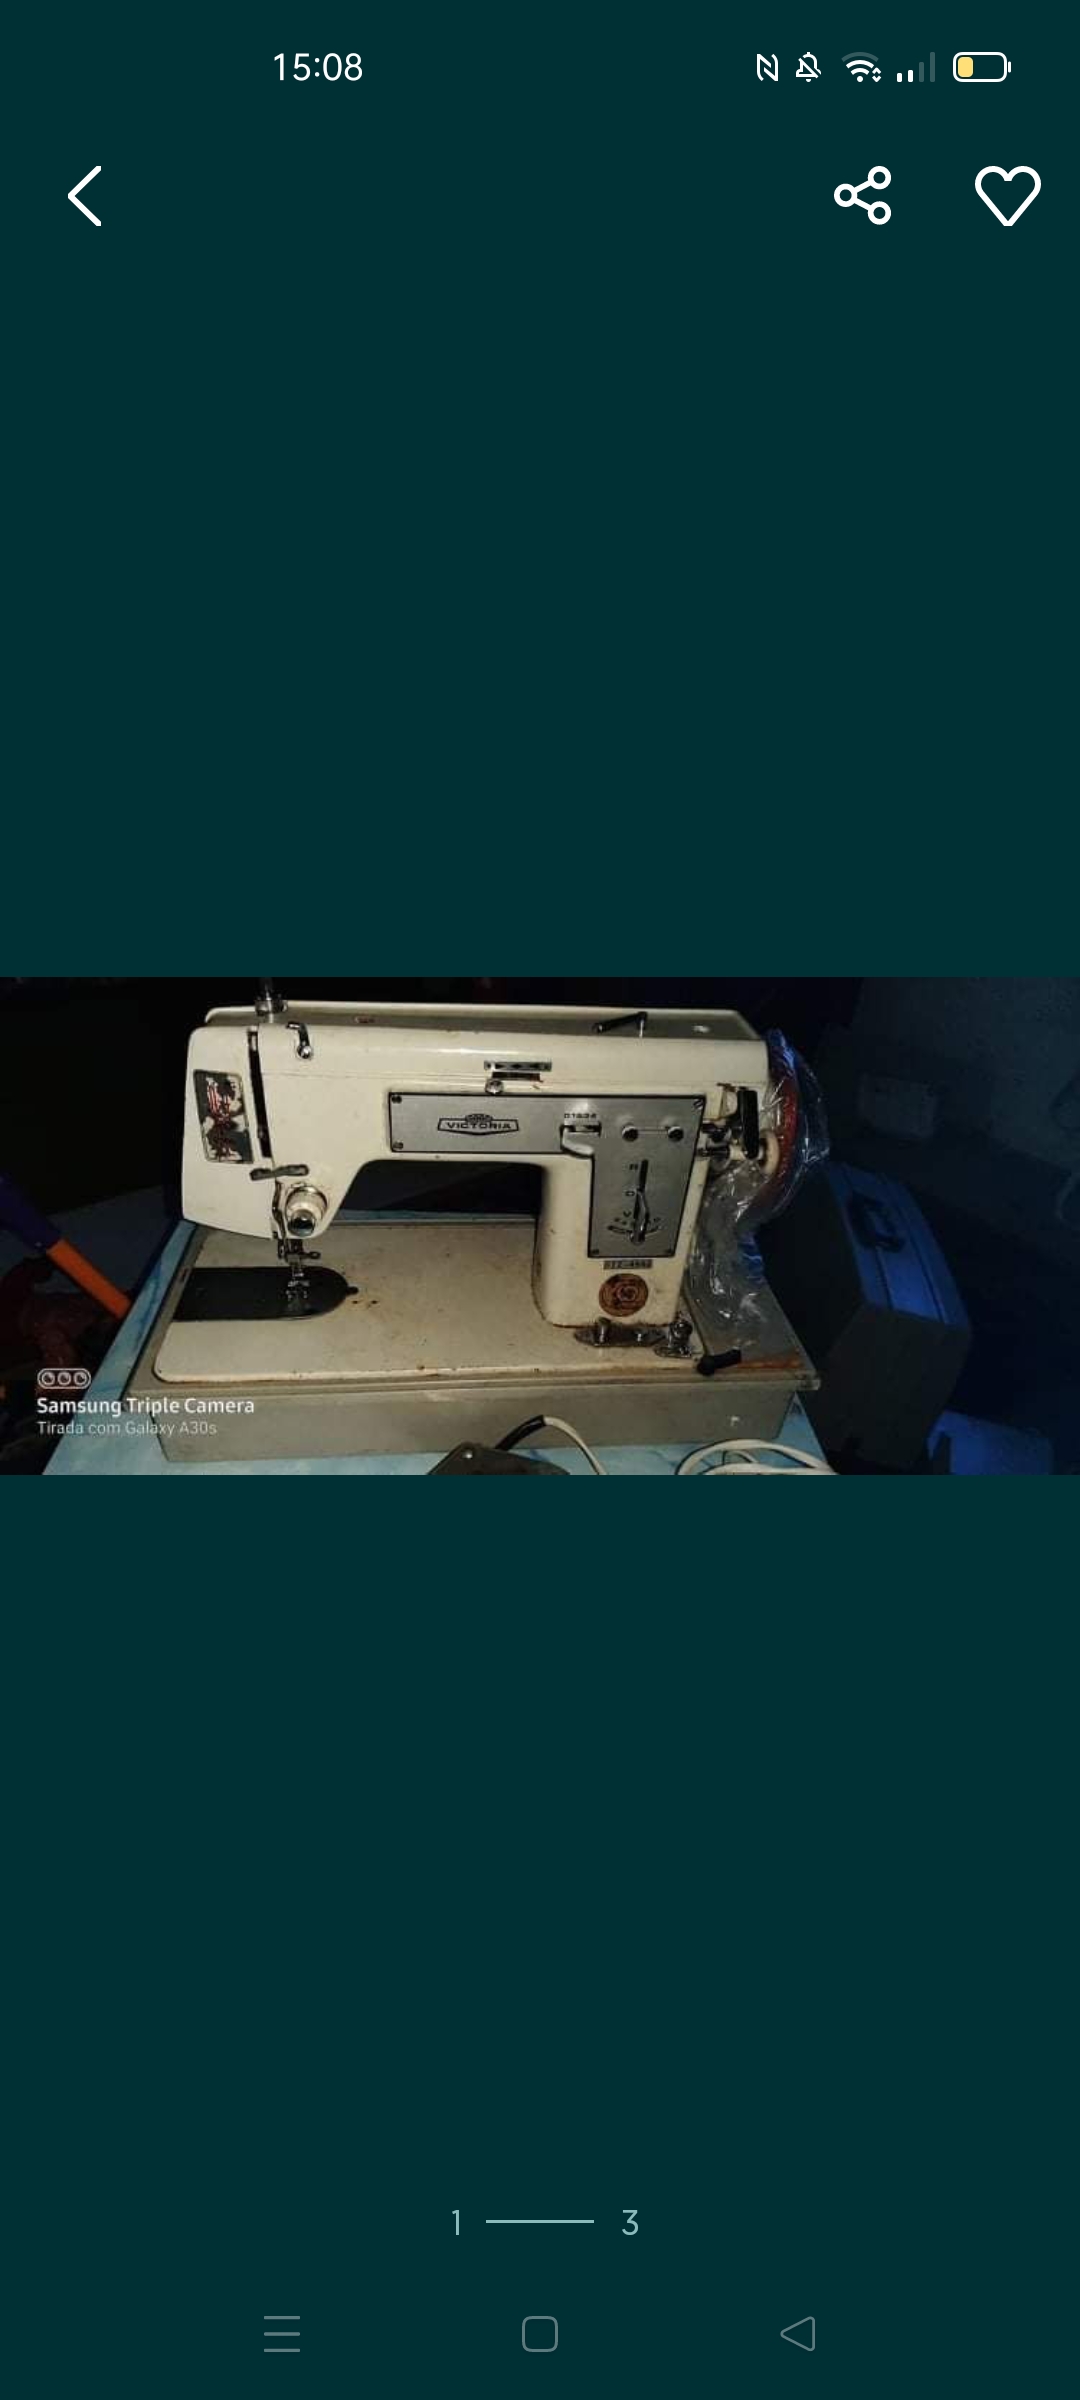 Máquina de costura vintage